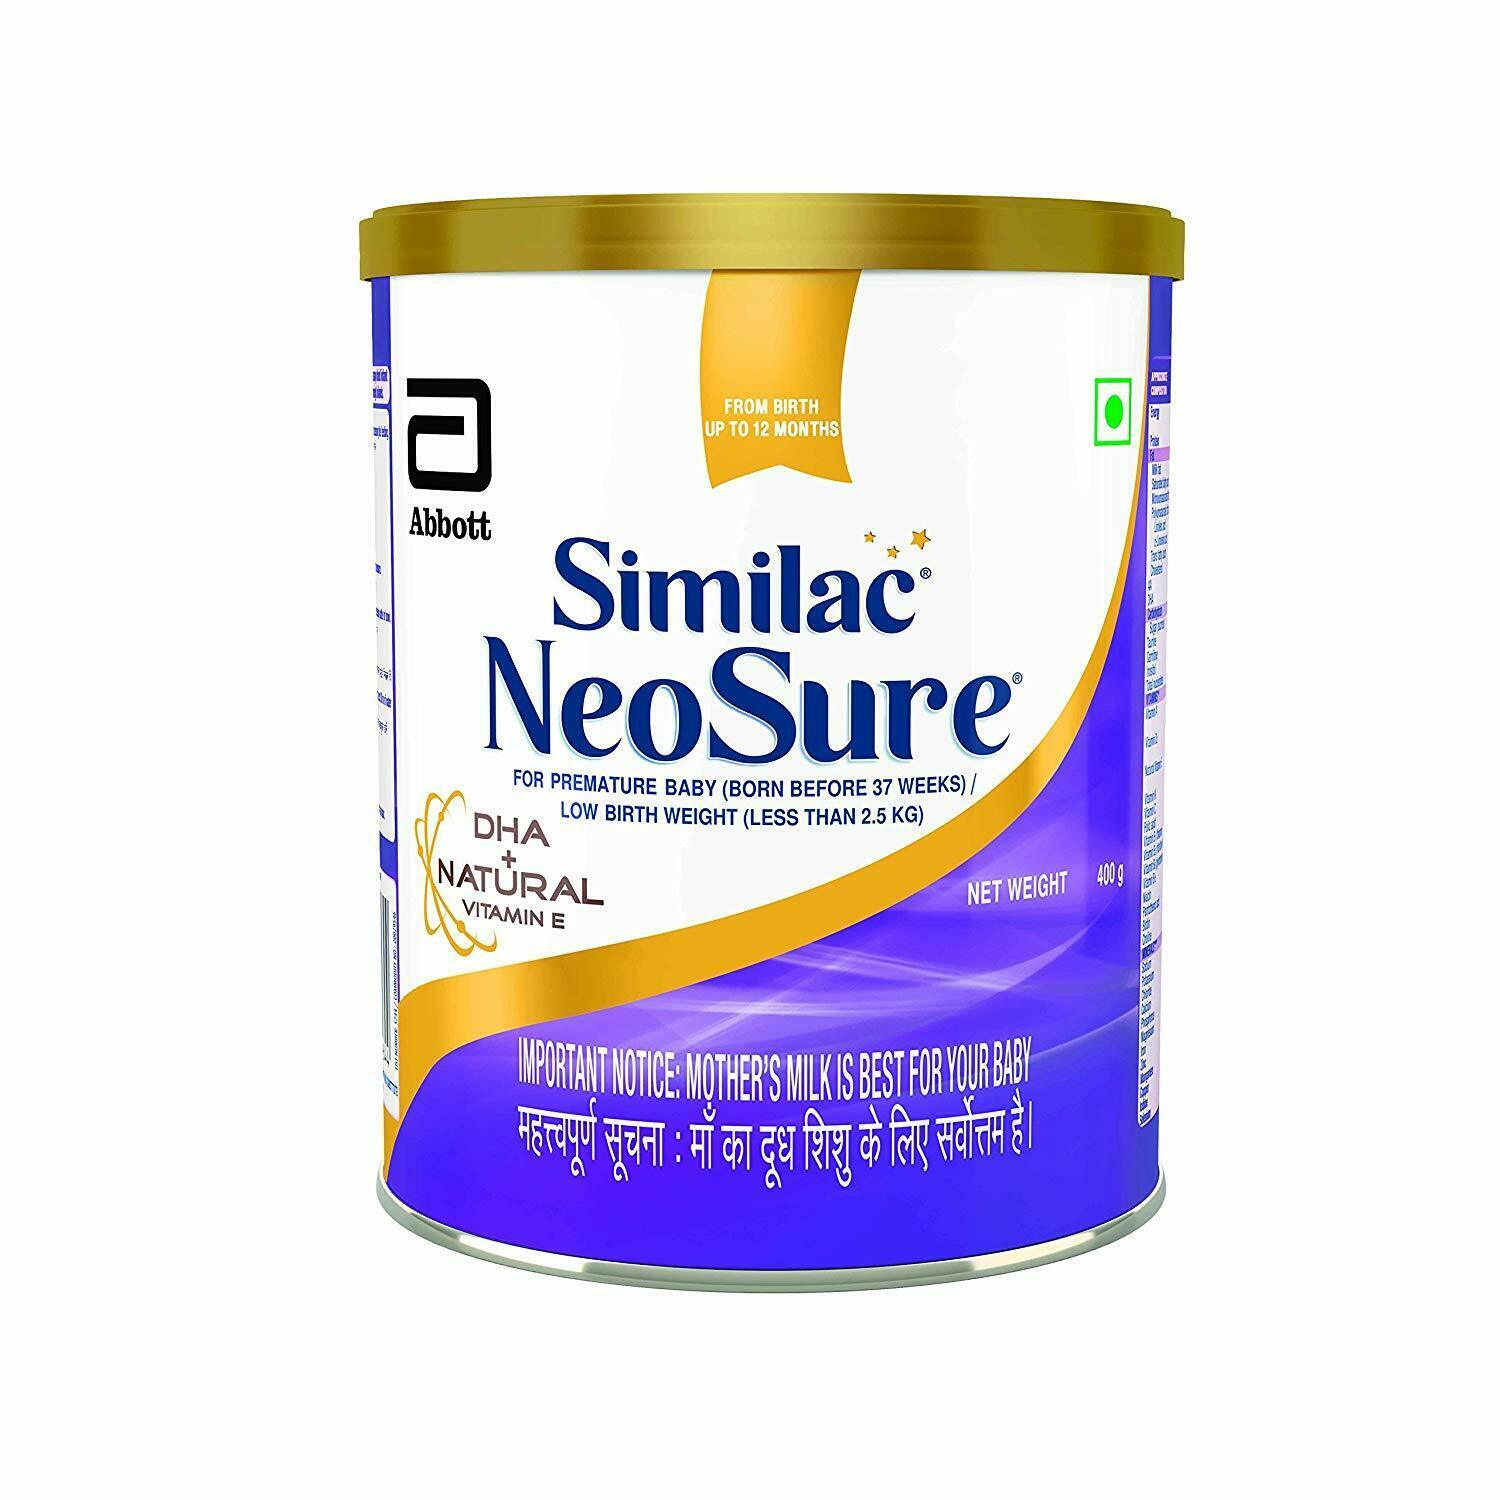 Similac Neosure Infant Formula DHA+Natural Vitamin E 400g, up to 12 Months - $27.42